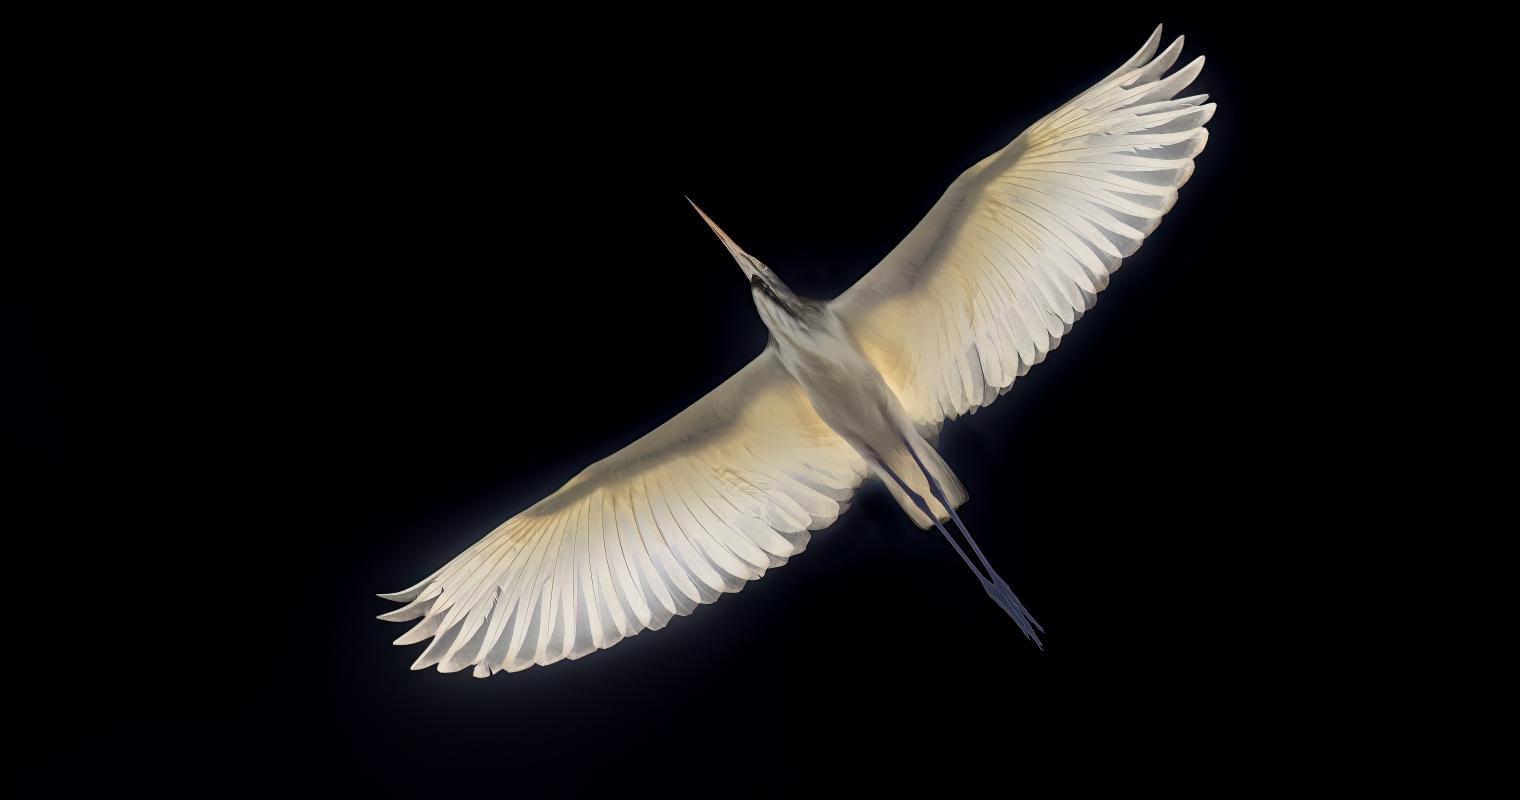 image of a bird in flight from below